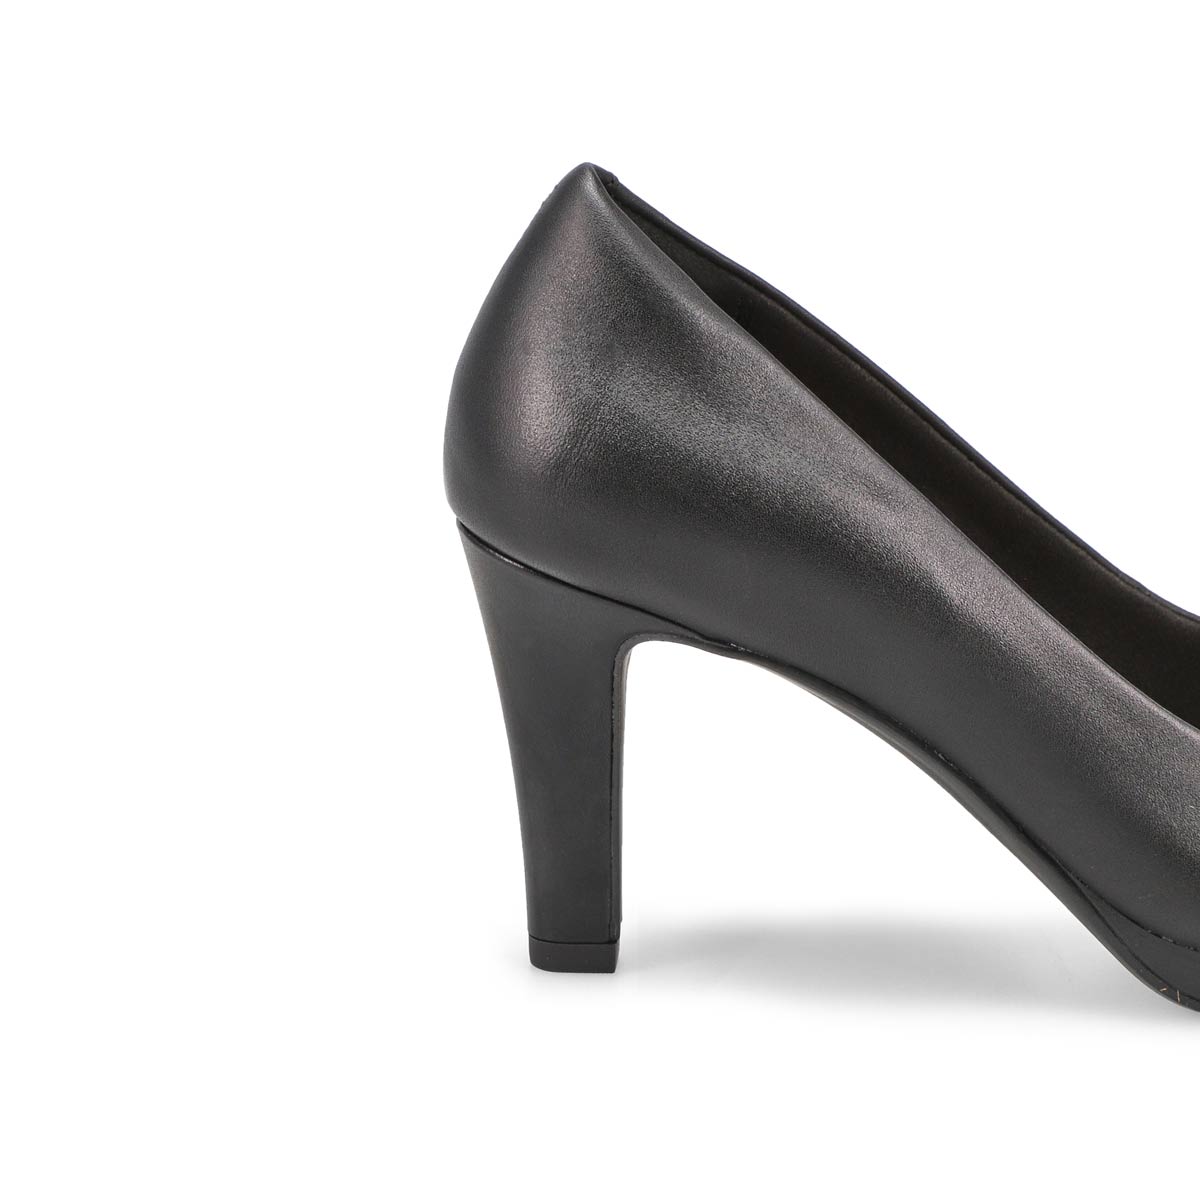 Women's Adriel Viola Dress Heel - Black